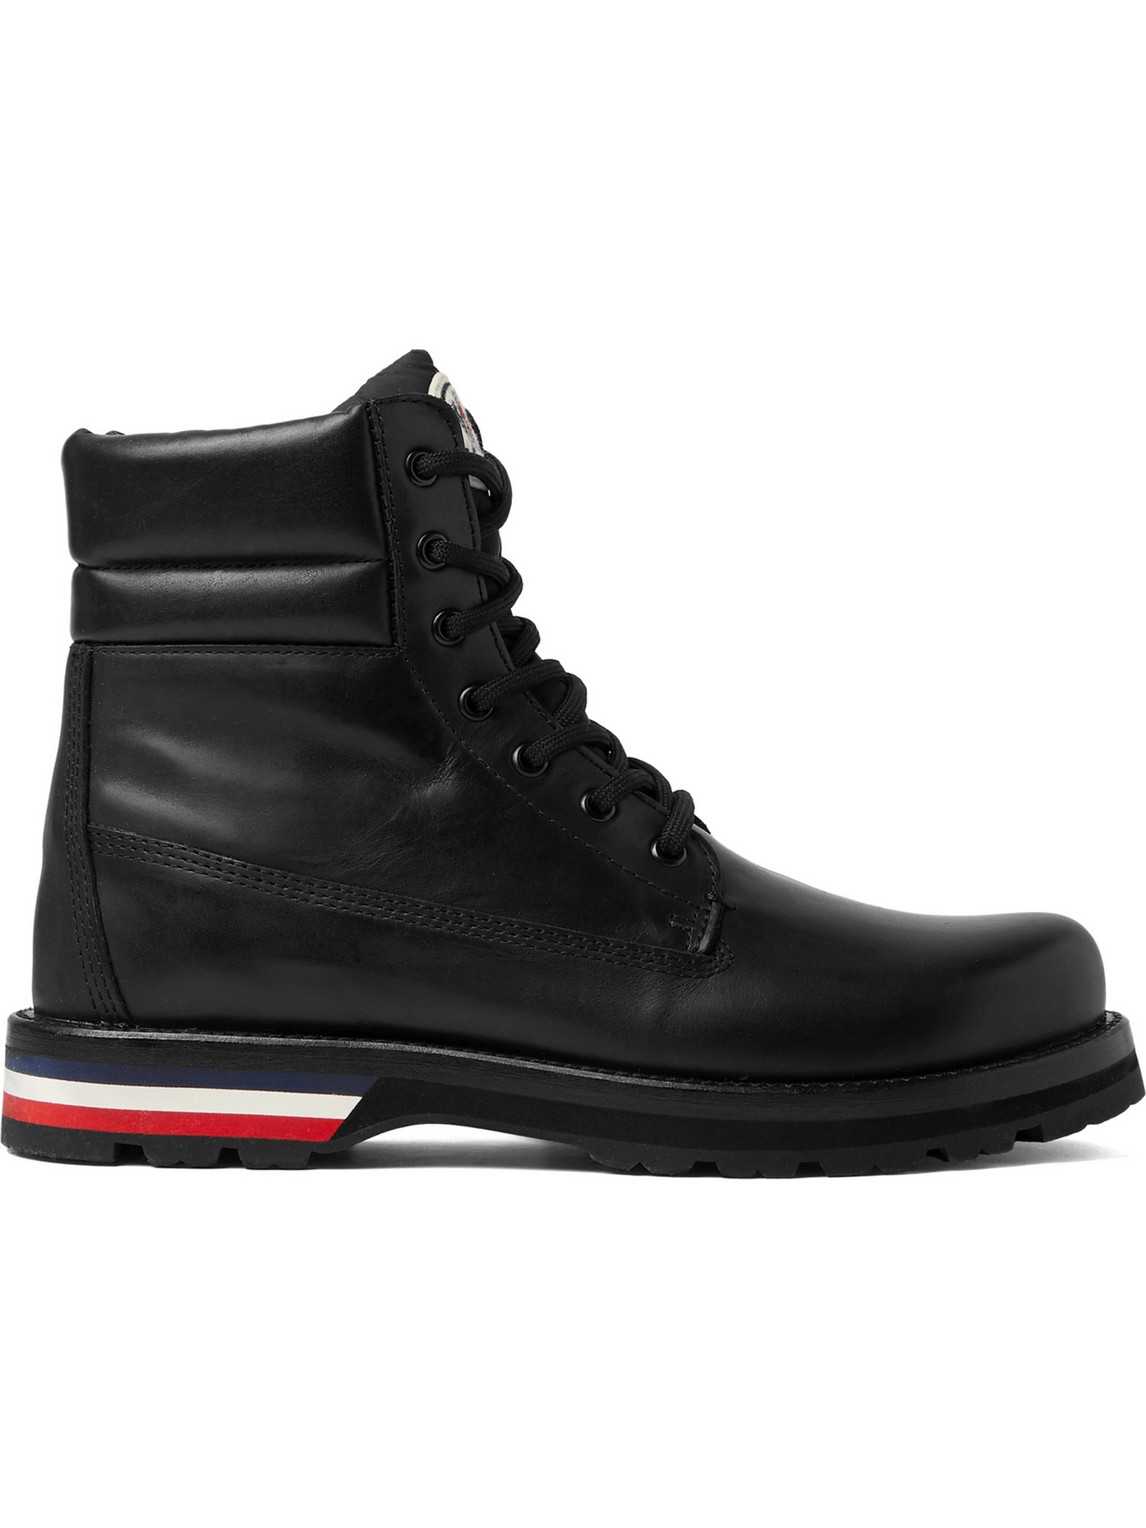 Moncler - Vancouver Striped Leather Hiking Boots - Men - Black - EU 41